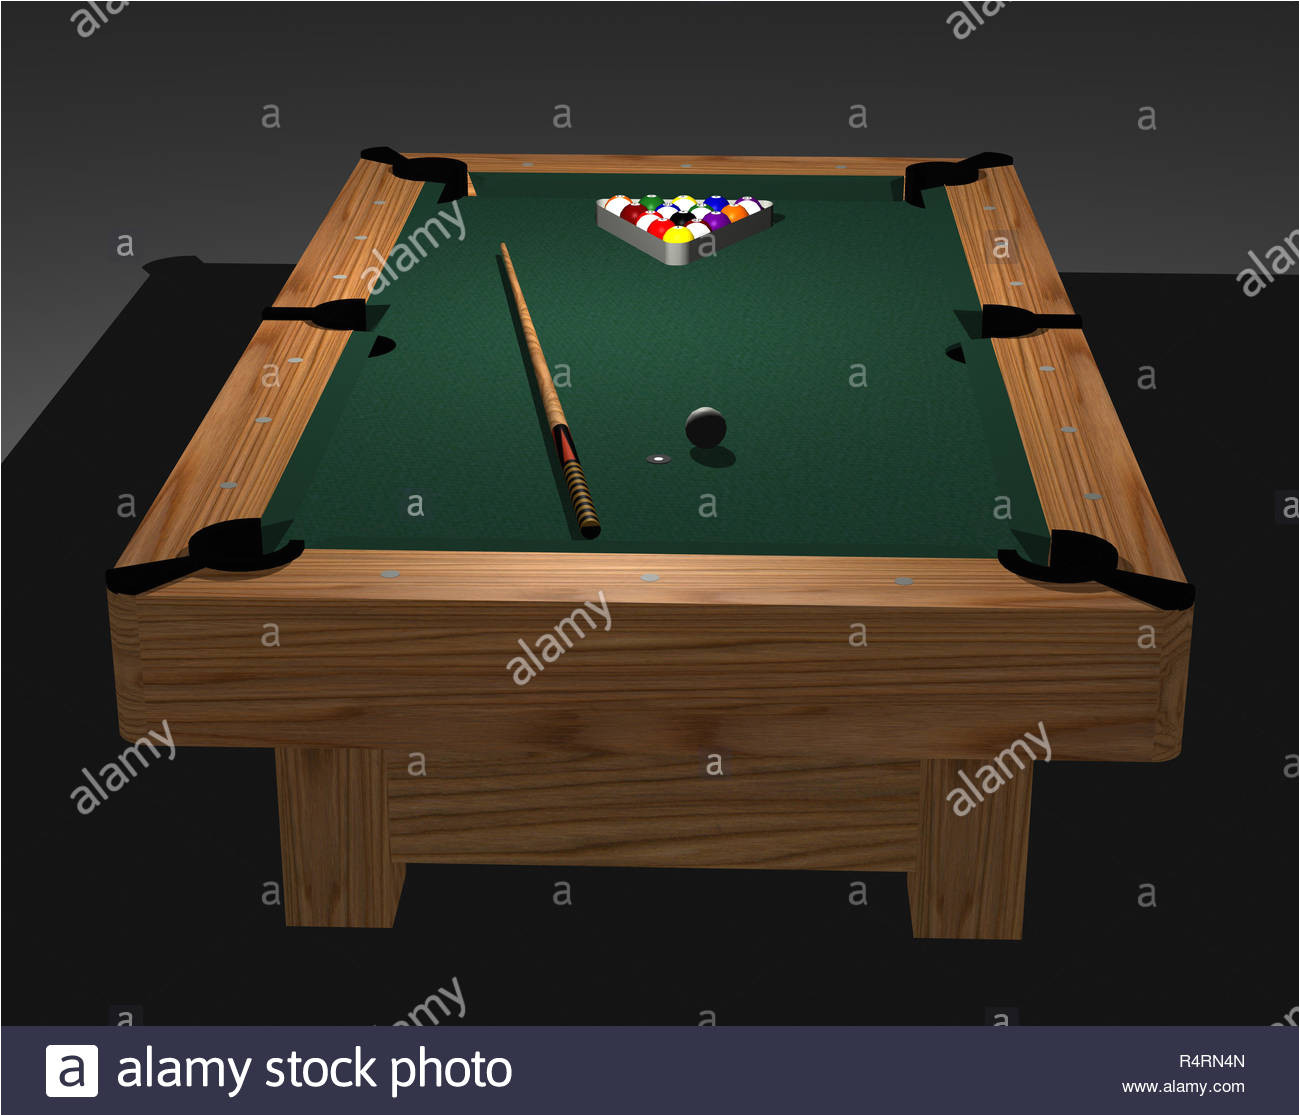 billiard table free stock image